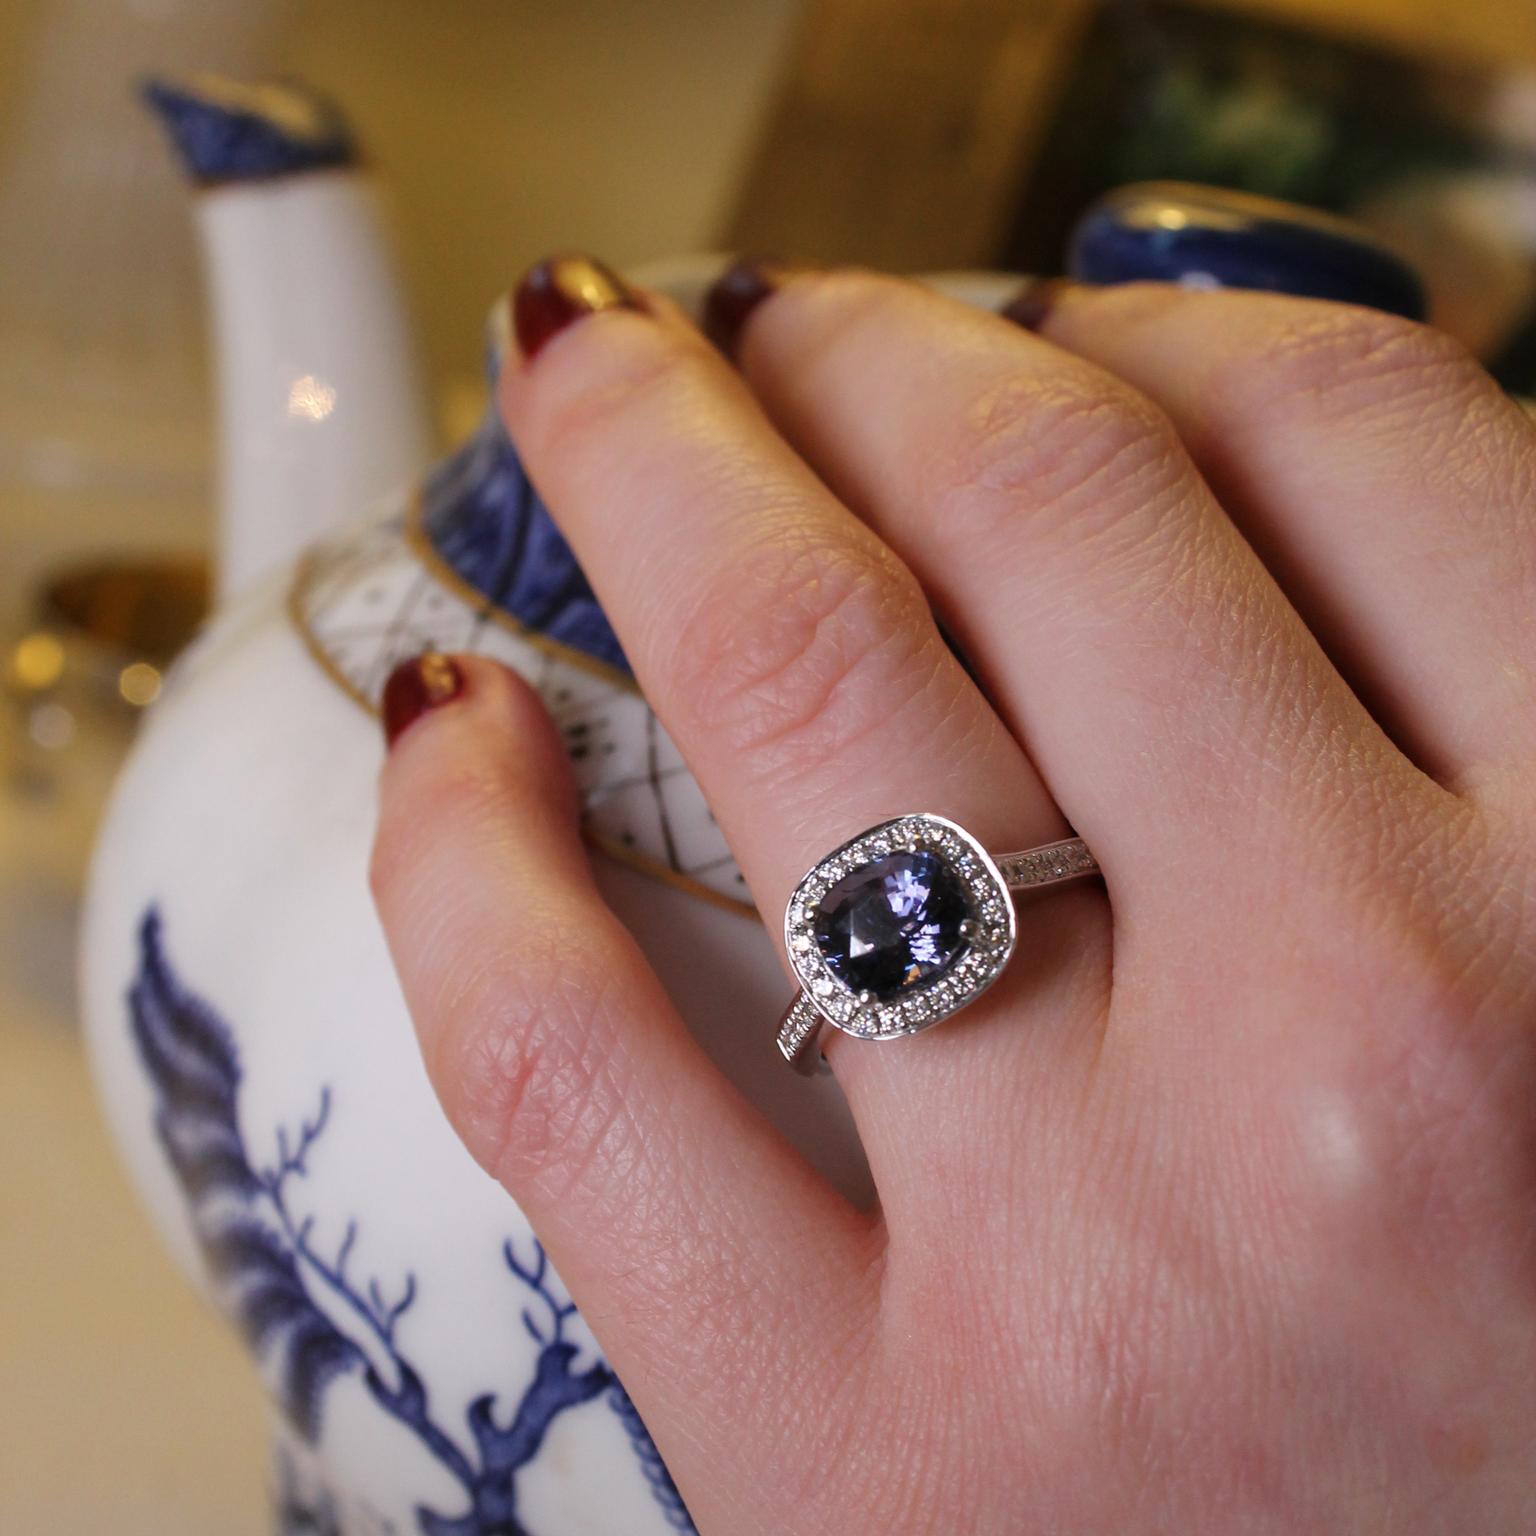 Holts mauve sapphire engagement ring